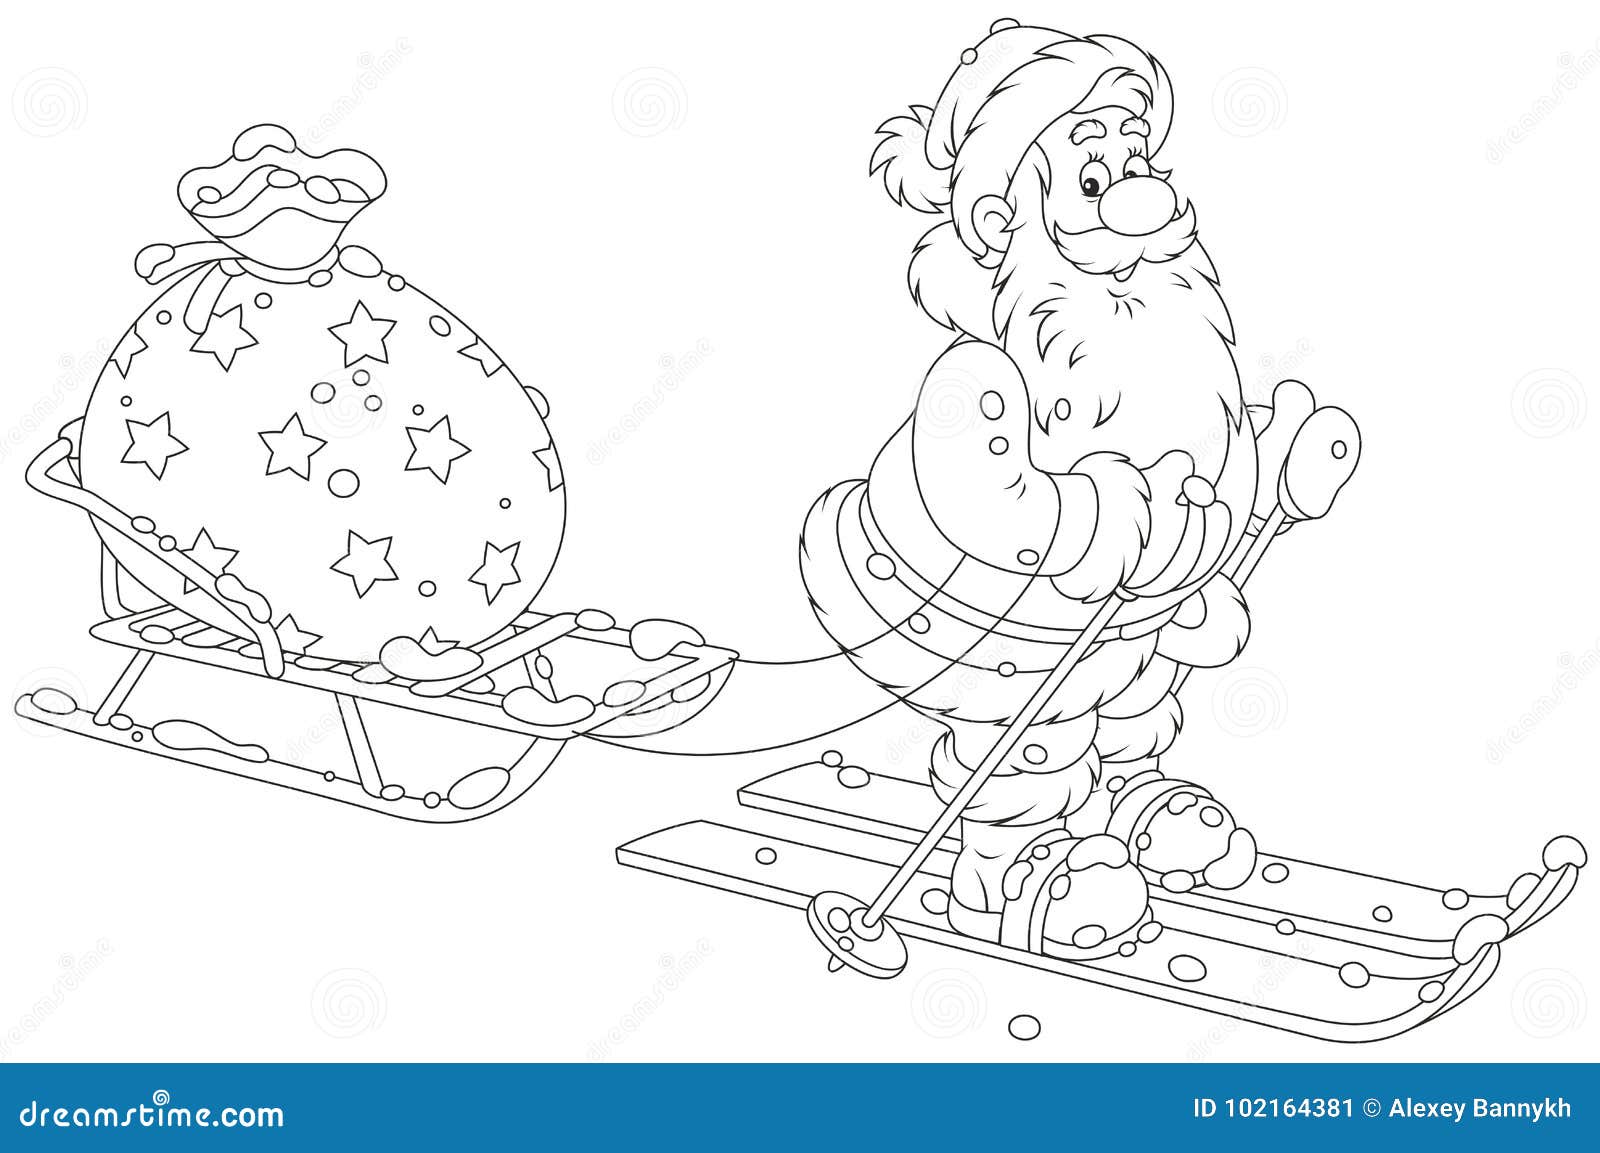 Дед Мороз на лыжах трафарет